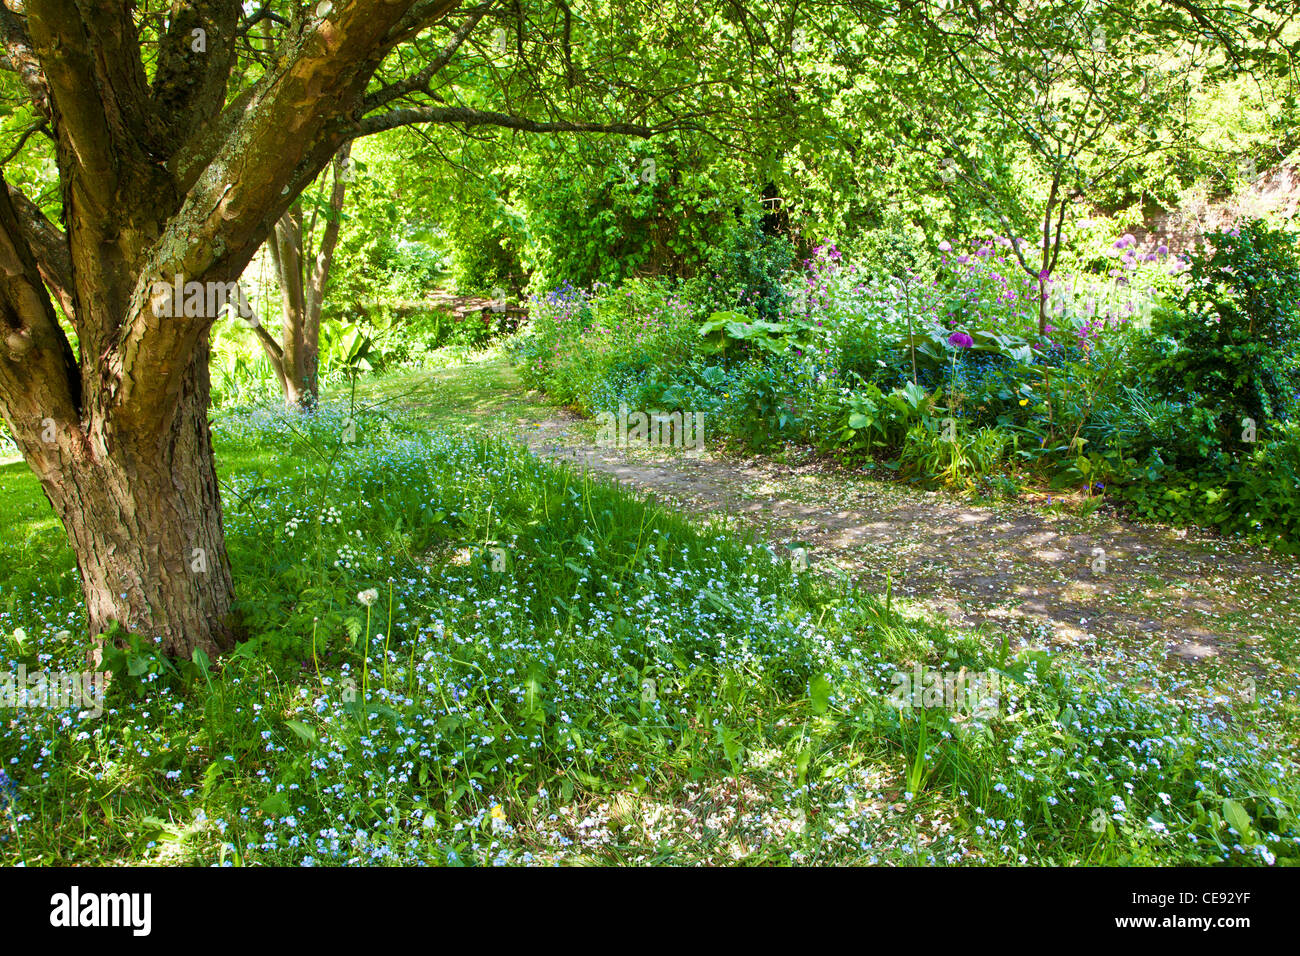 A garden path through dappled sunshine in an English country garden in early summer. Stock Photo